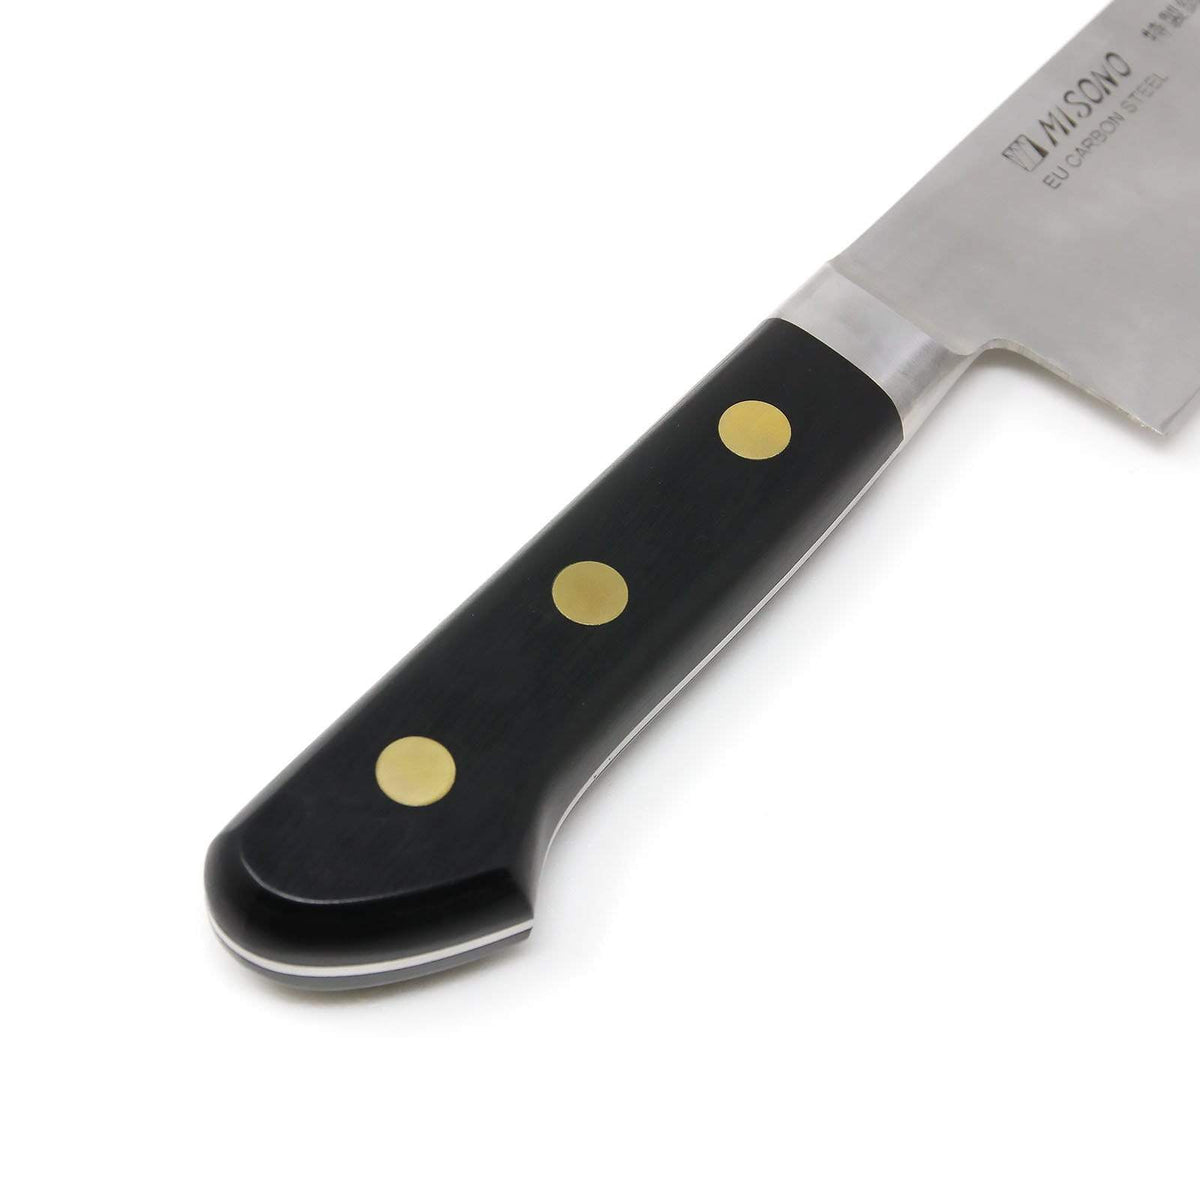 Swedish Chef Knife